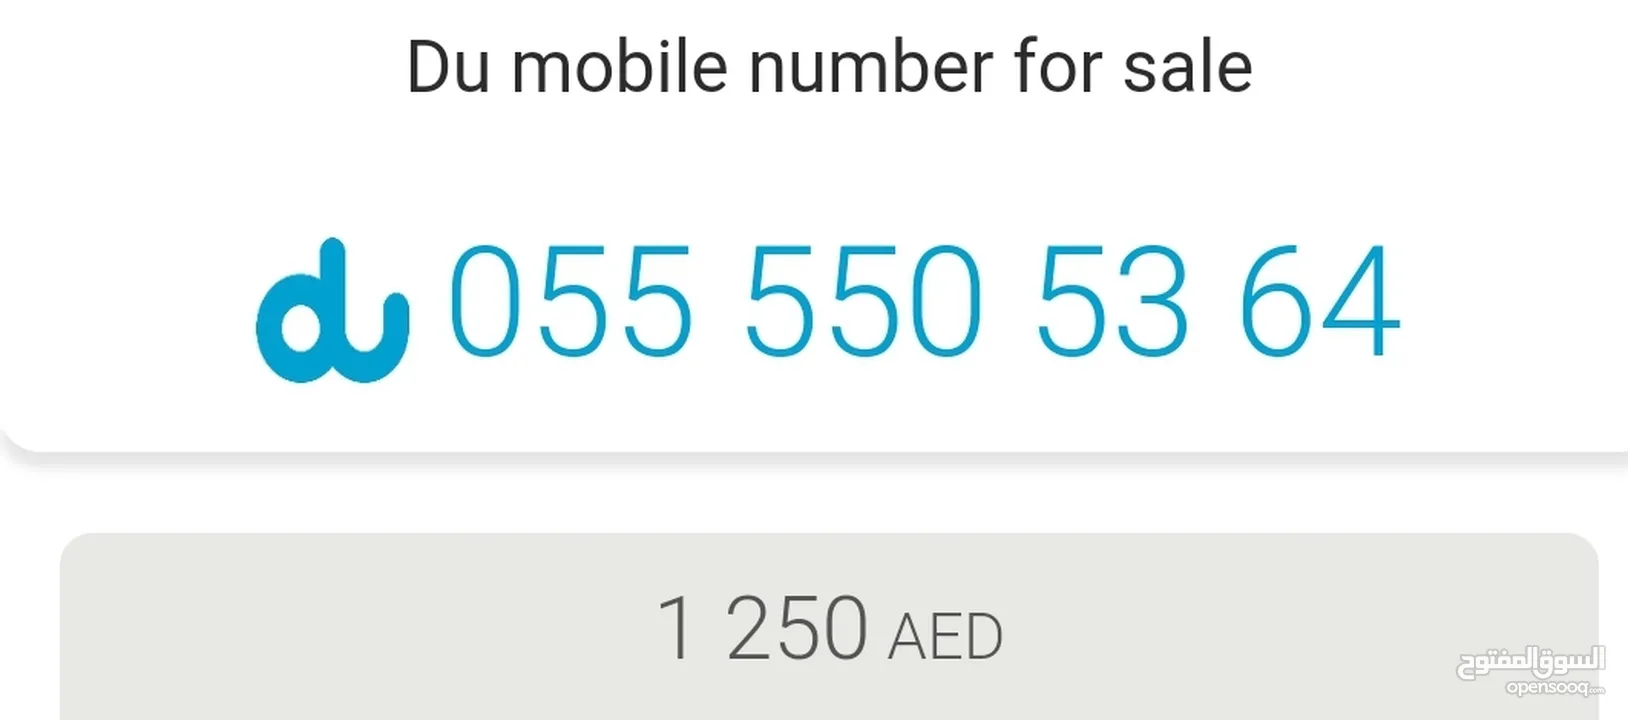 prepaid mobile numbers for saleارقام مميز للبيع